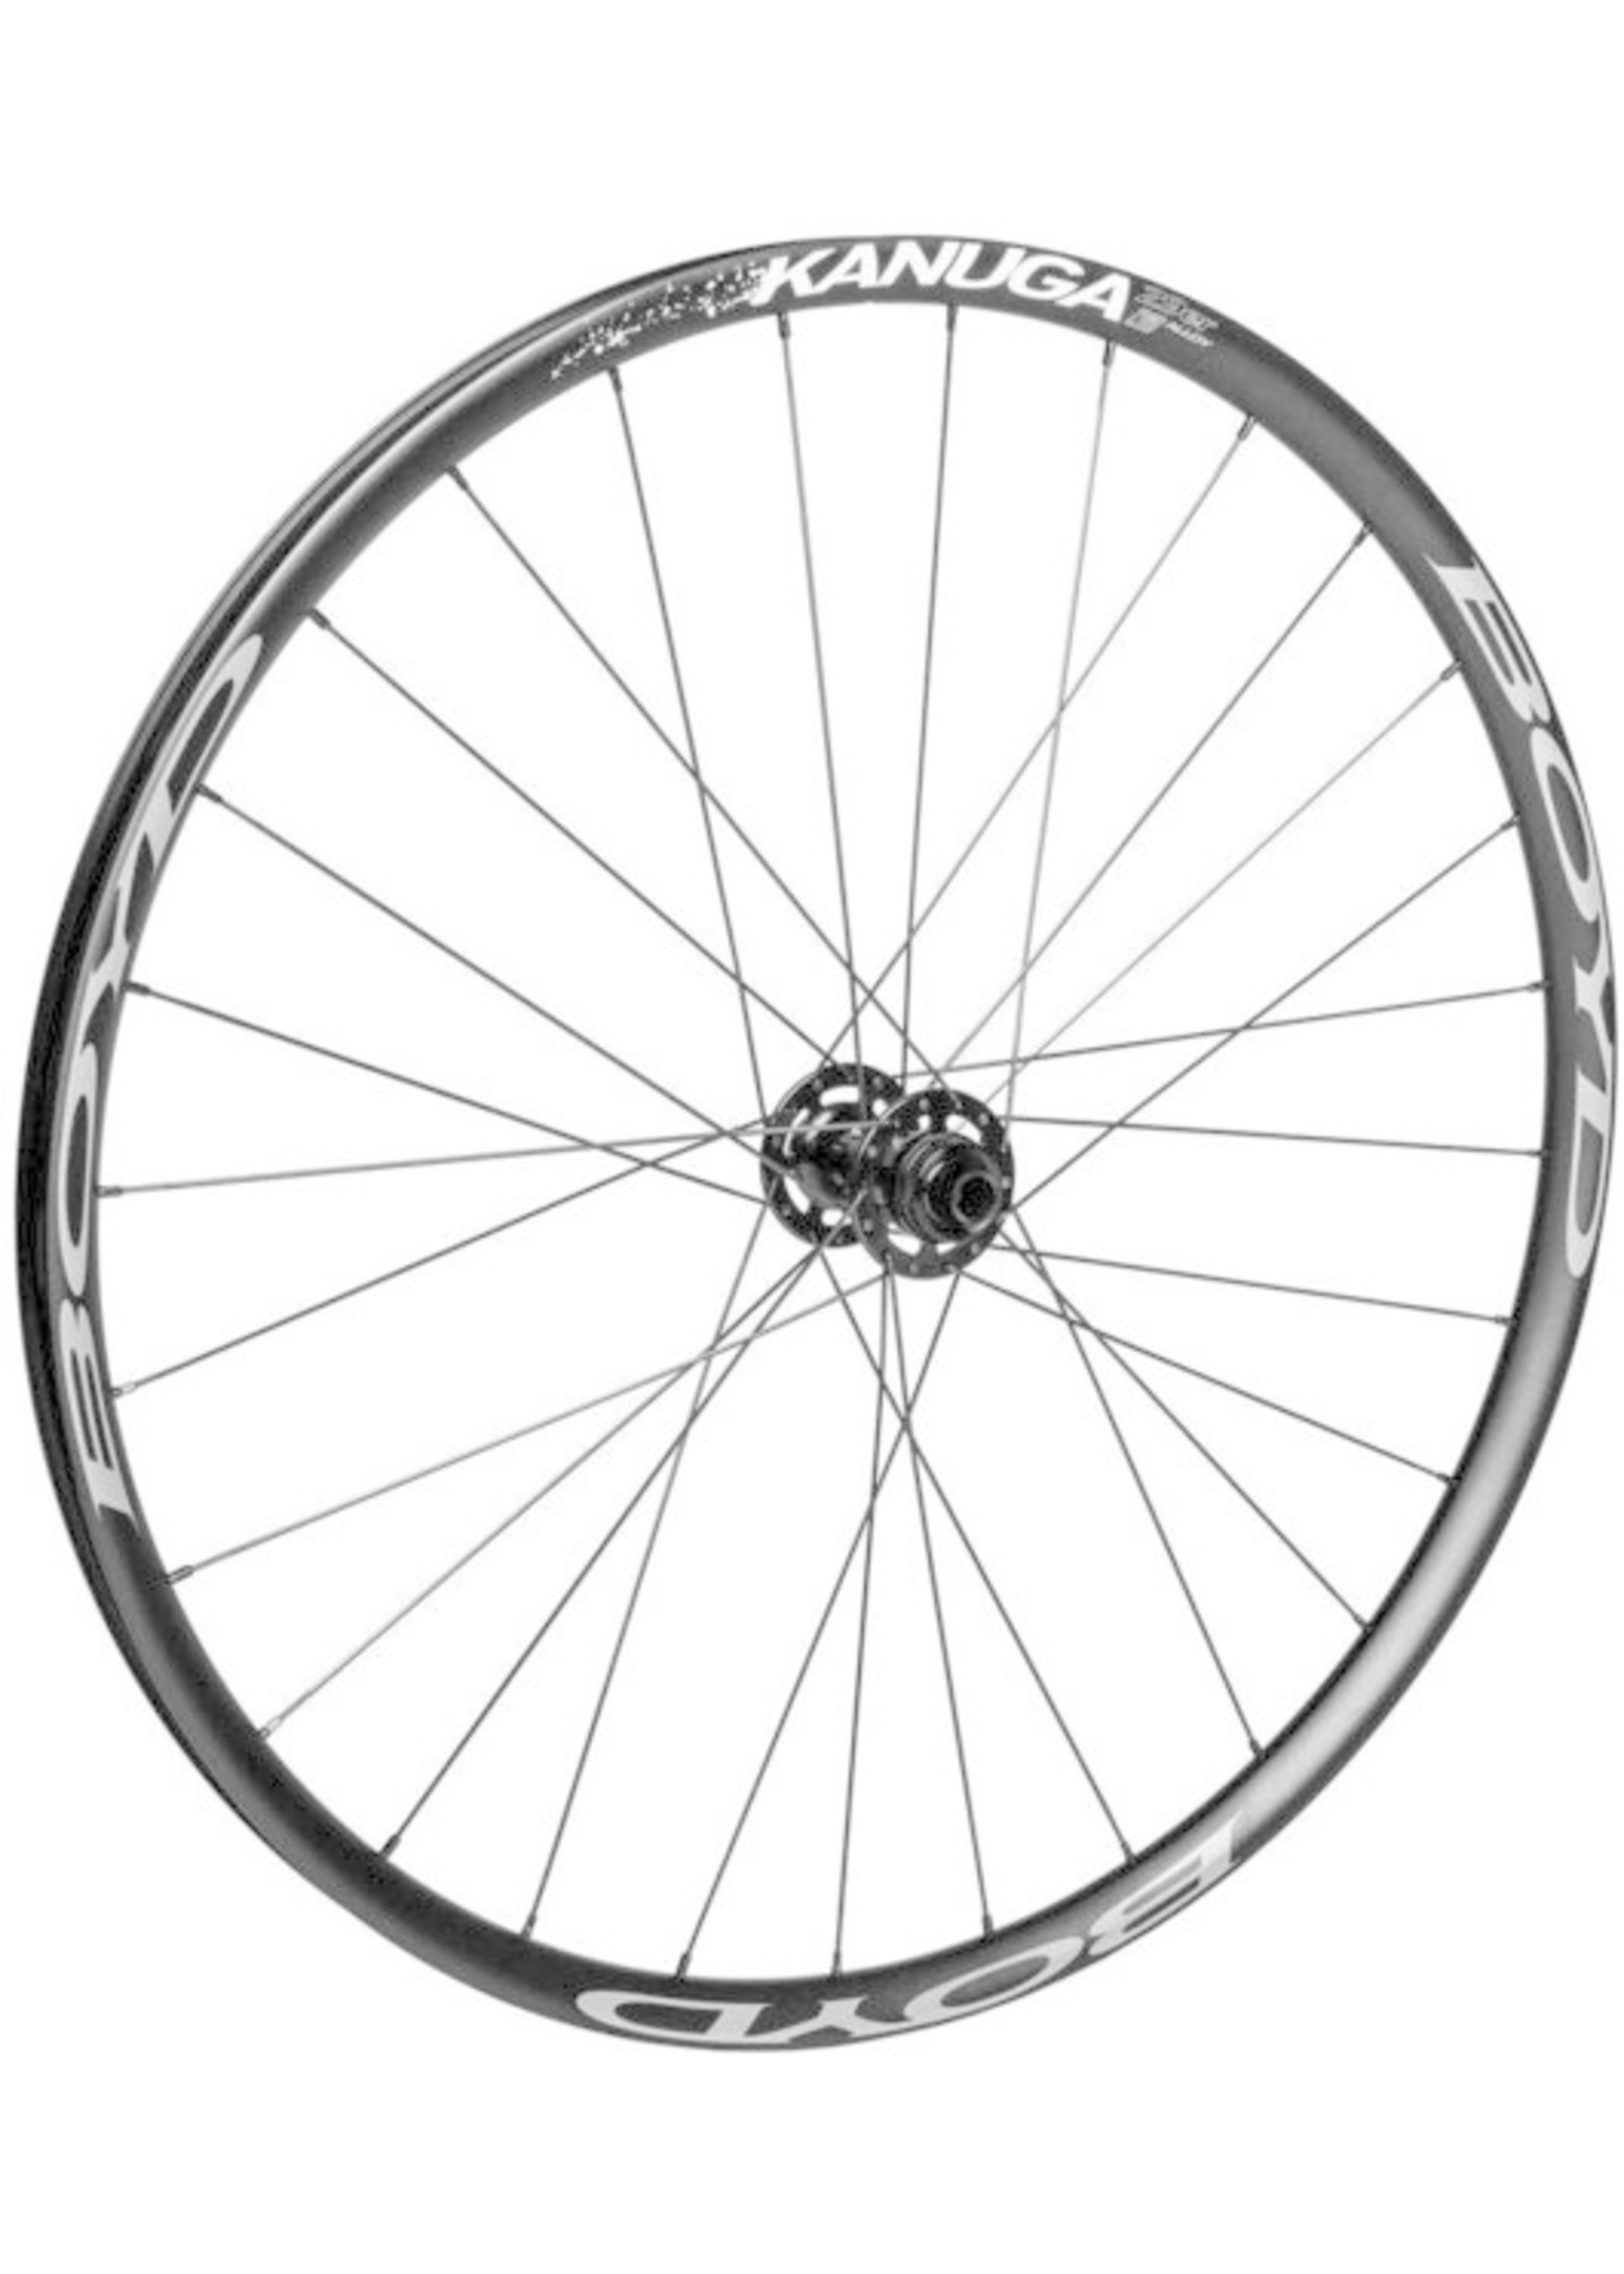 Boyd Cycling Kanuga 27.5 Alloy Front Wheel